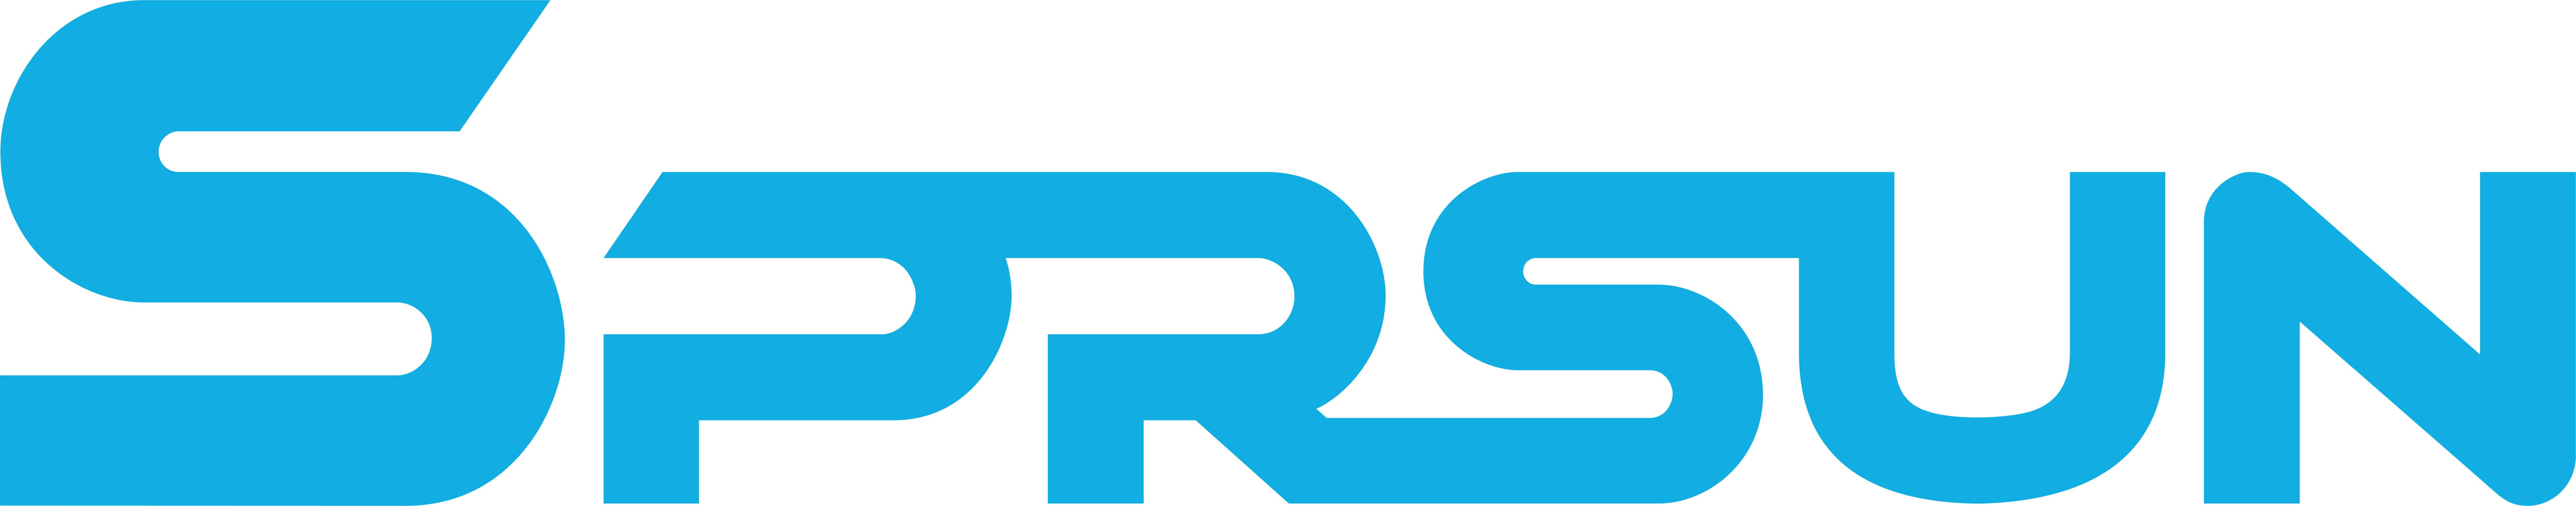 logotipo SPRSUN